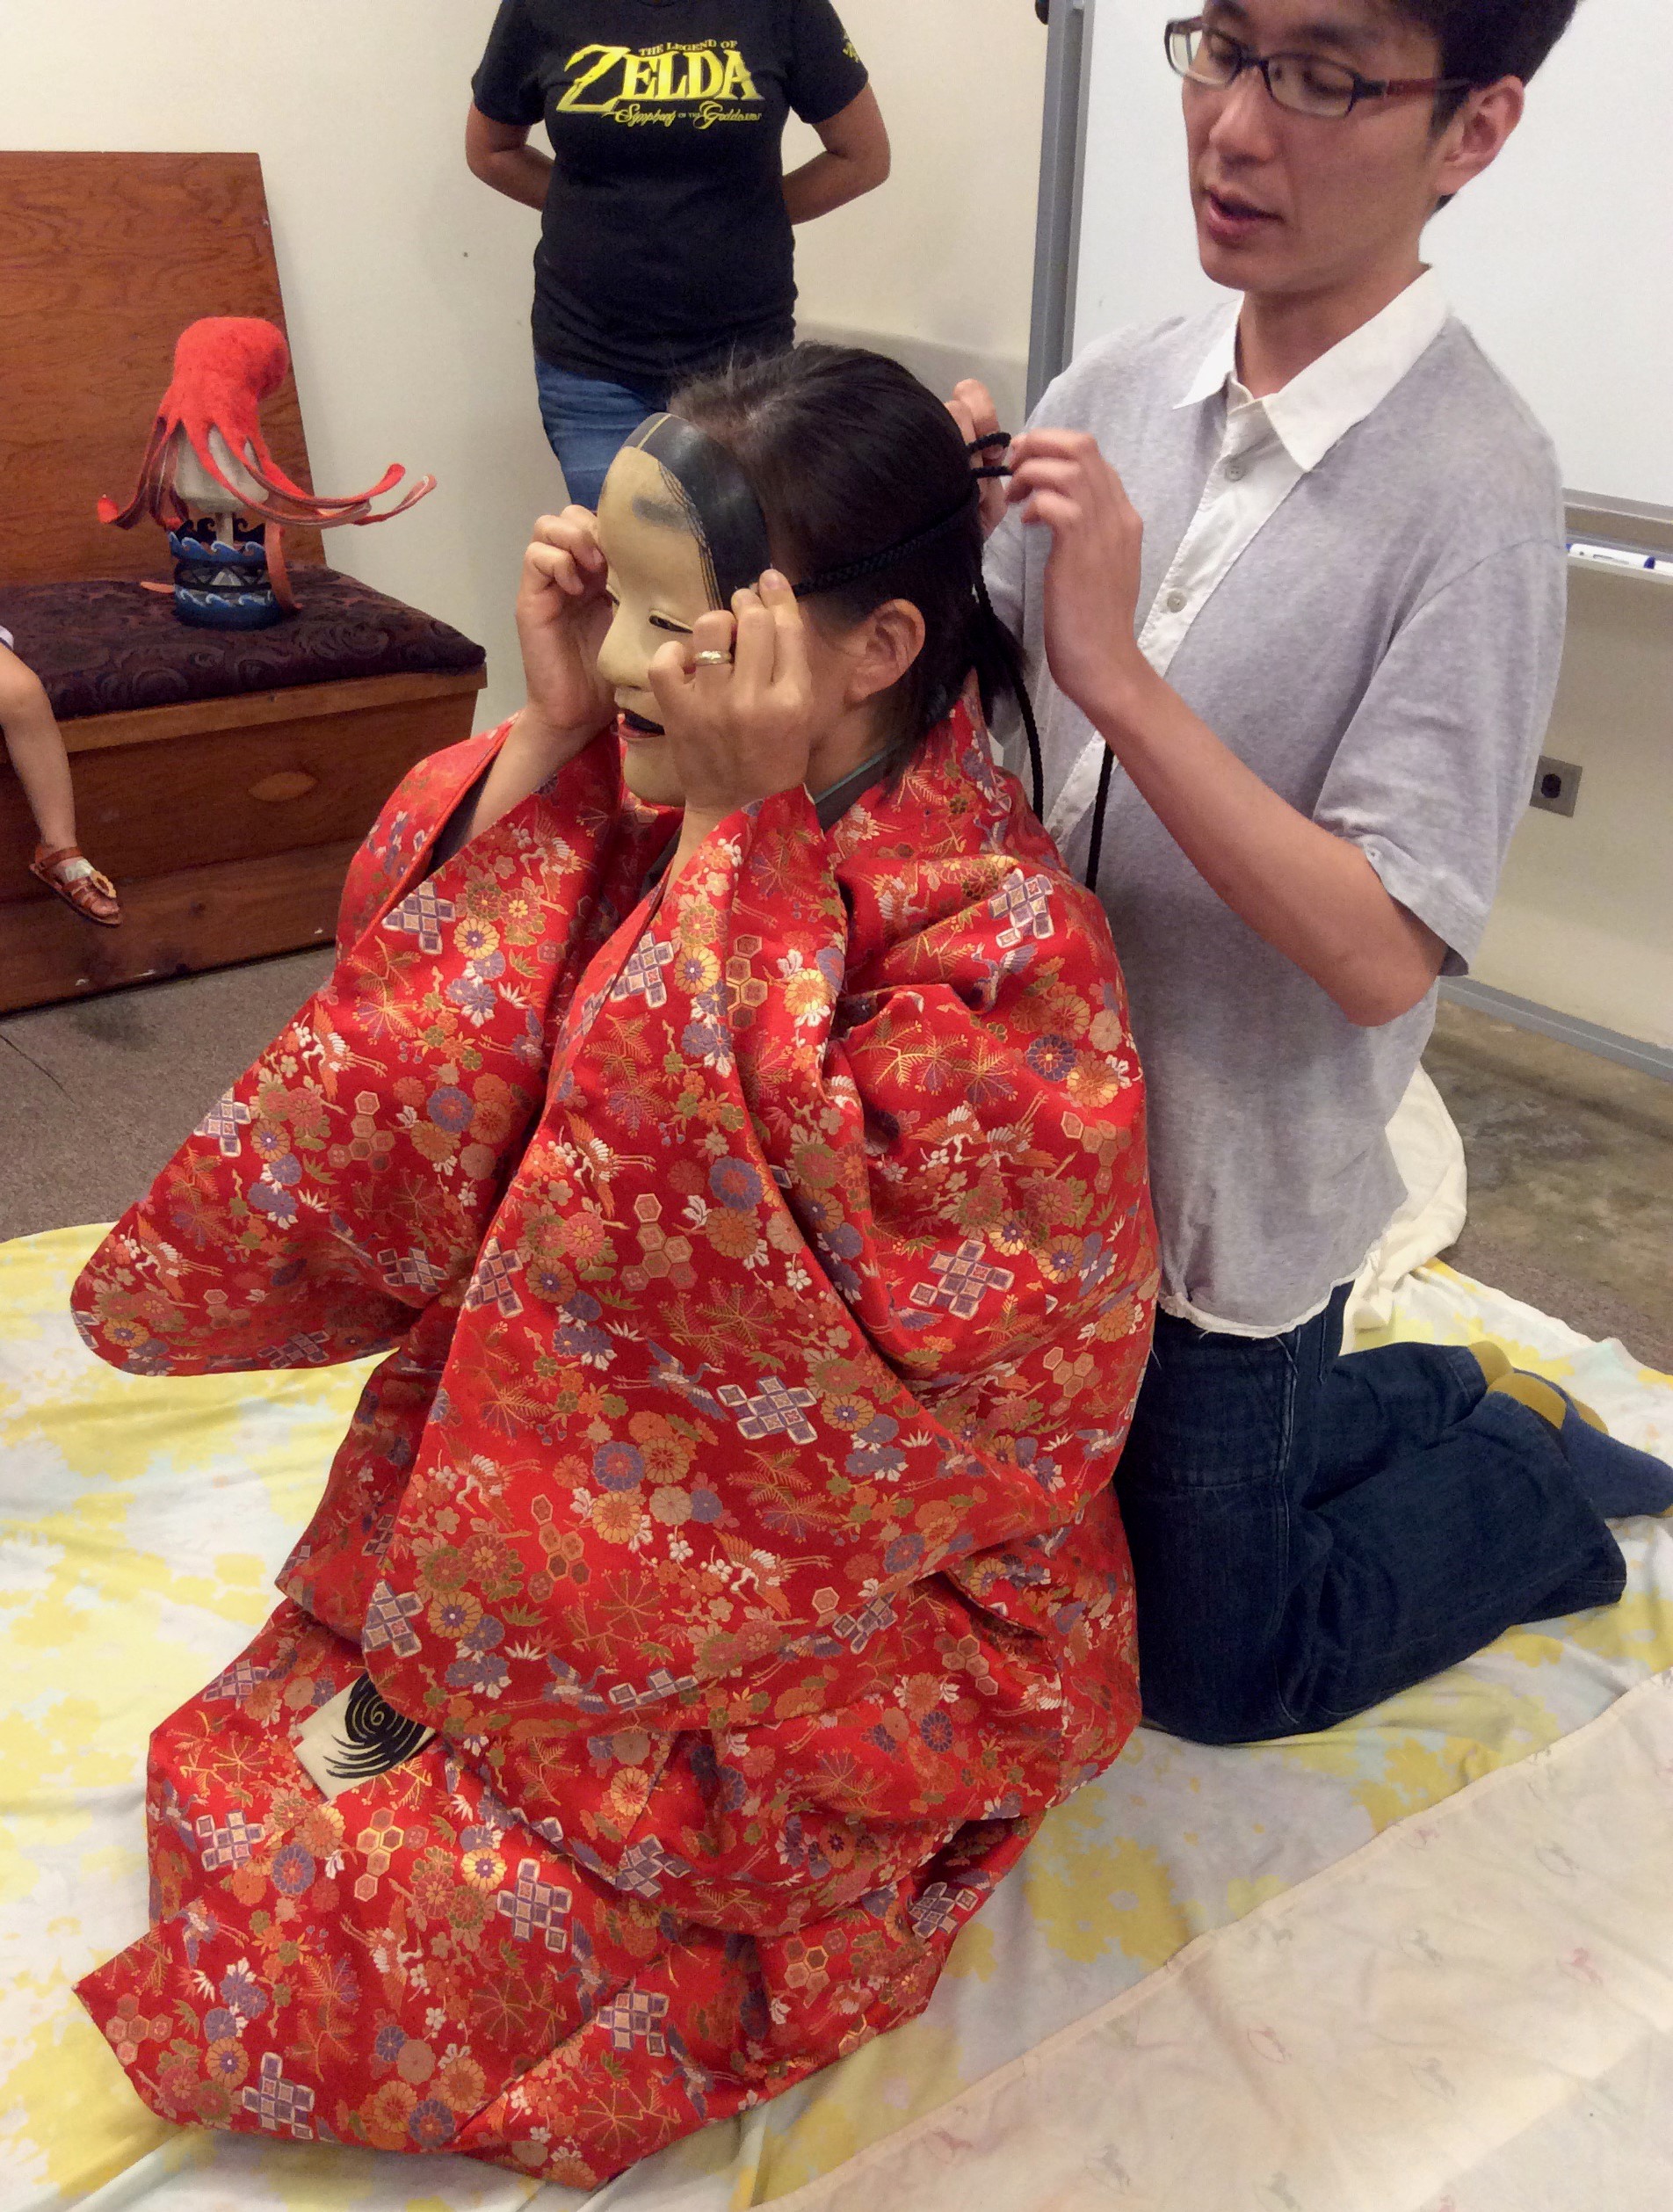 Shigeyama Sennojō III ties a noh mask onto a student in a red brocade kimono